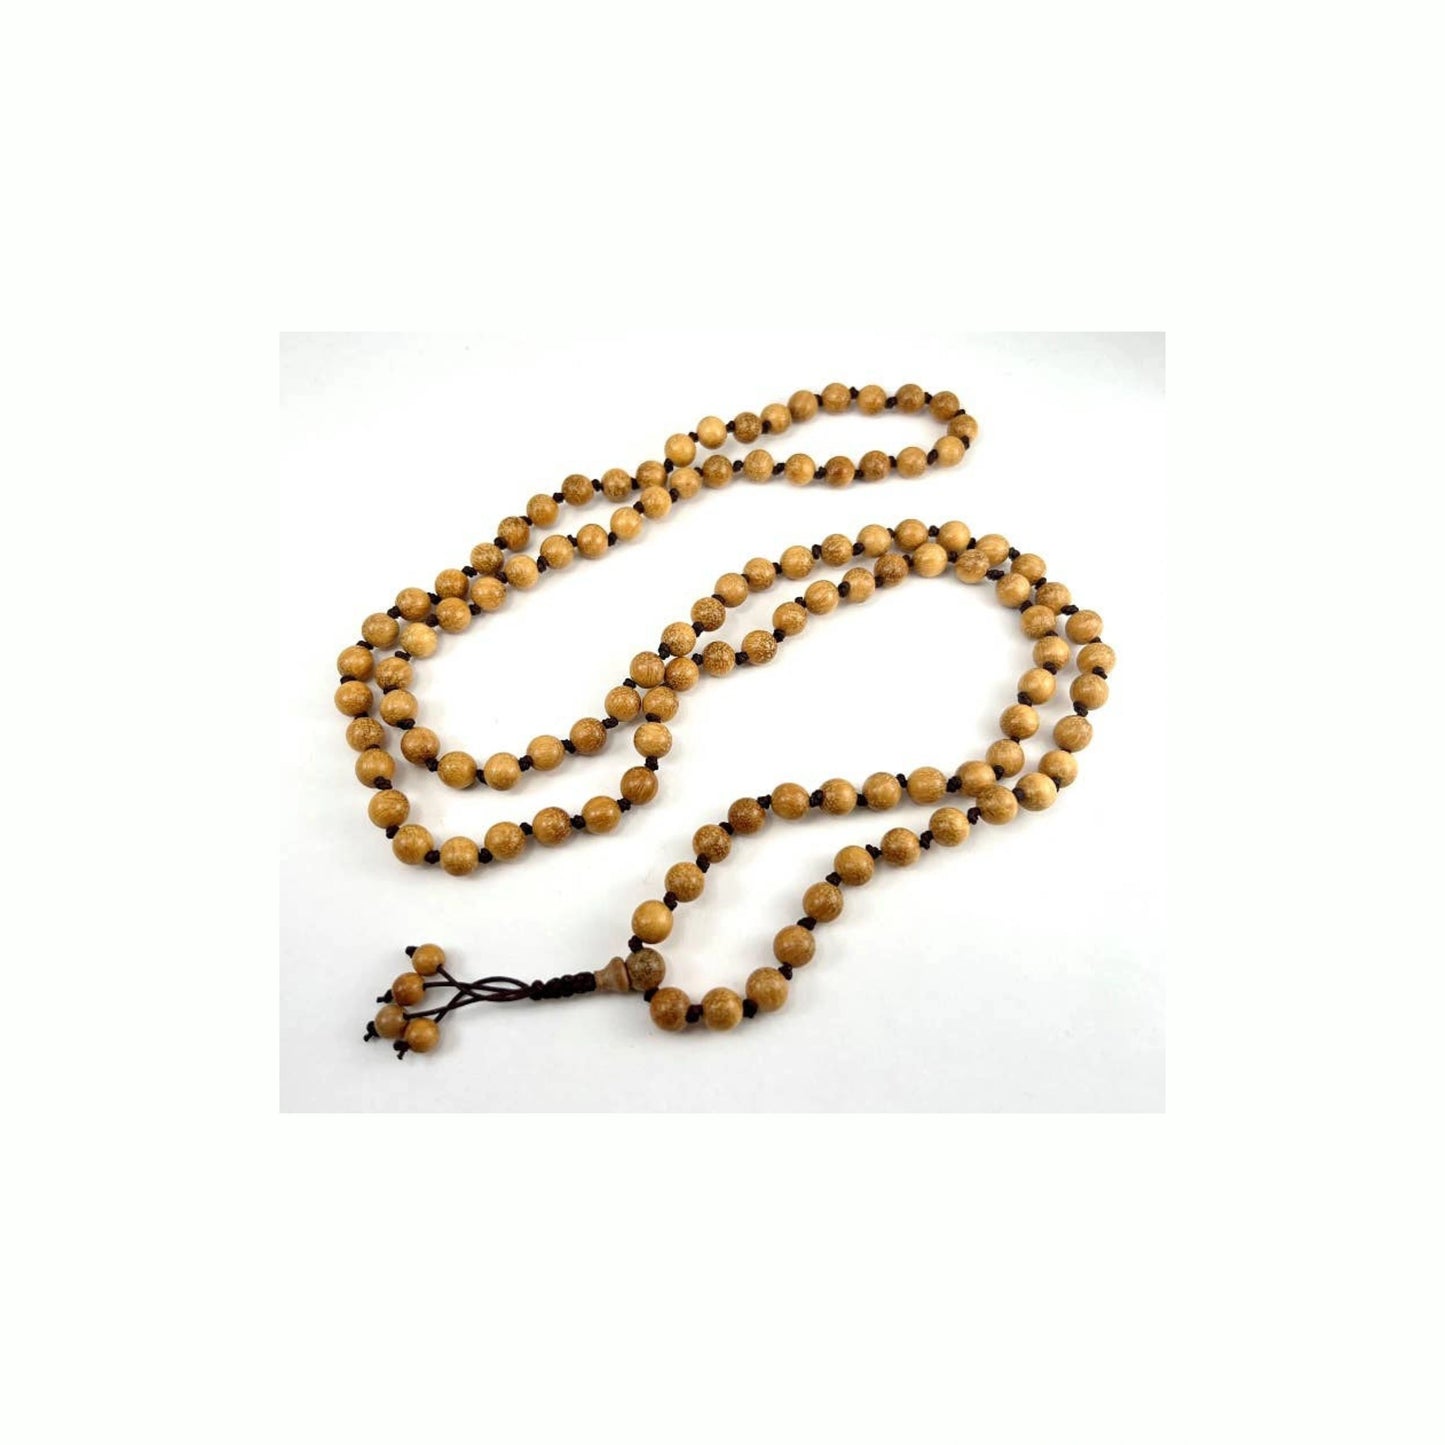 Boxwood Knotted 108 Bead Mala - Prayer Beads - 8mm (1 Pack)